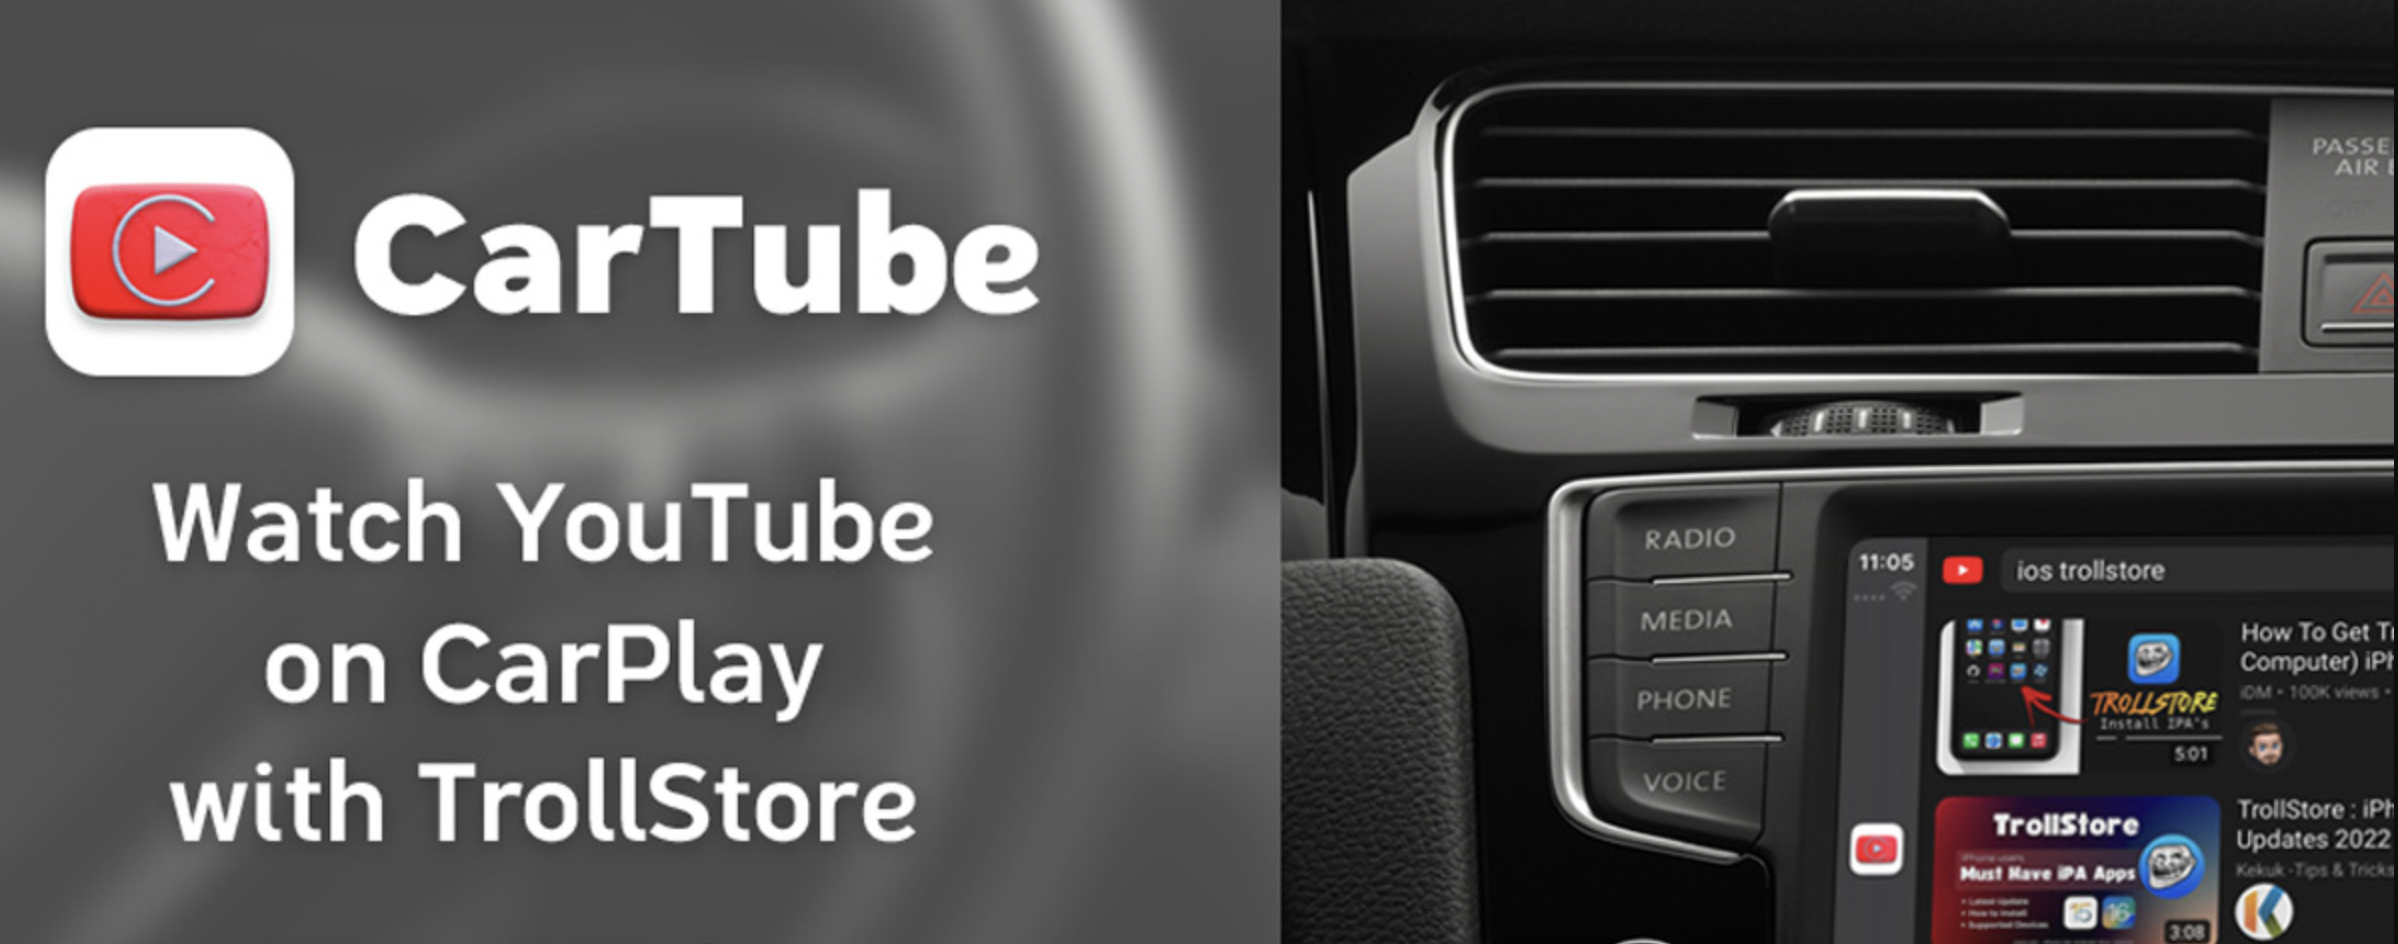 CarTube - YouTube on CarPlay